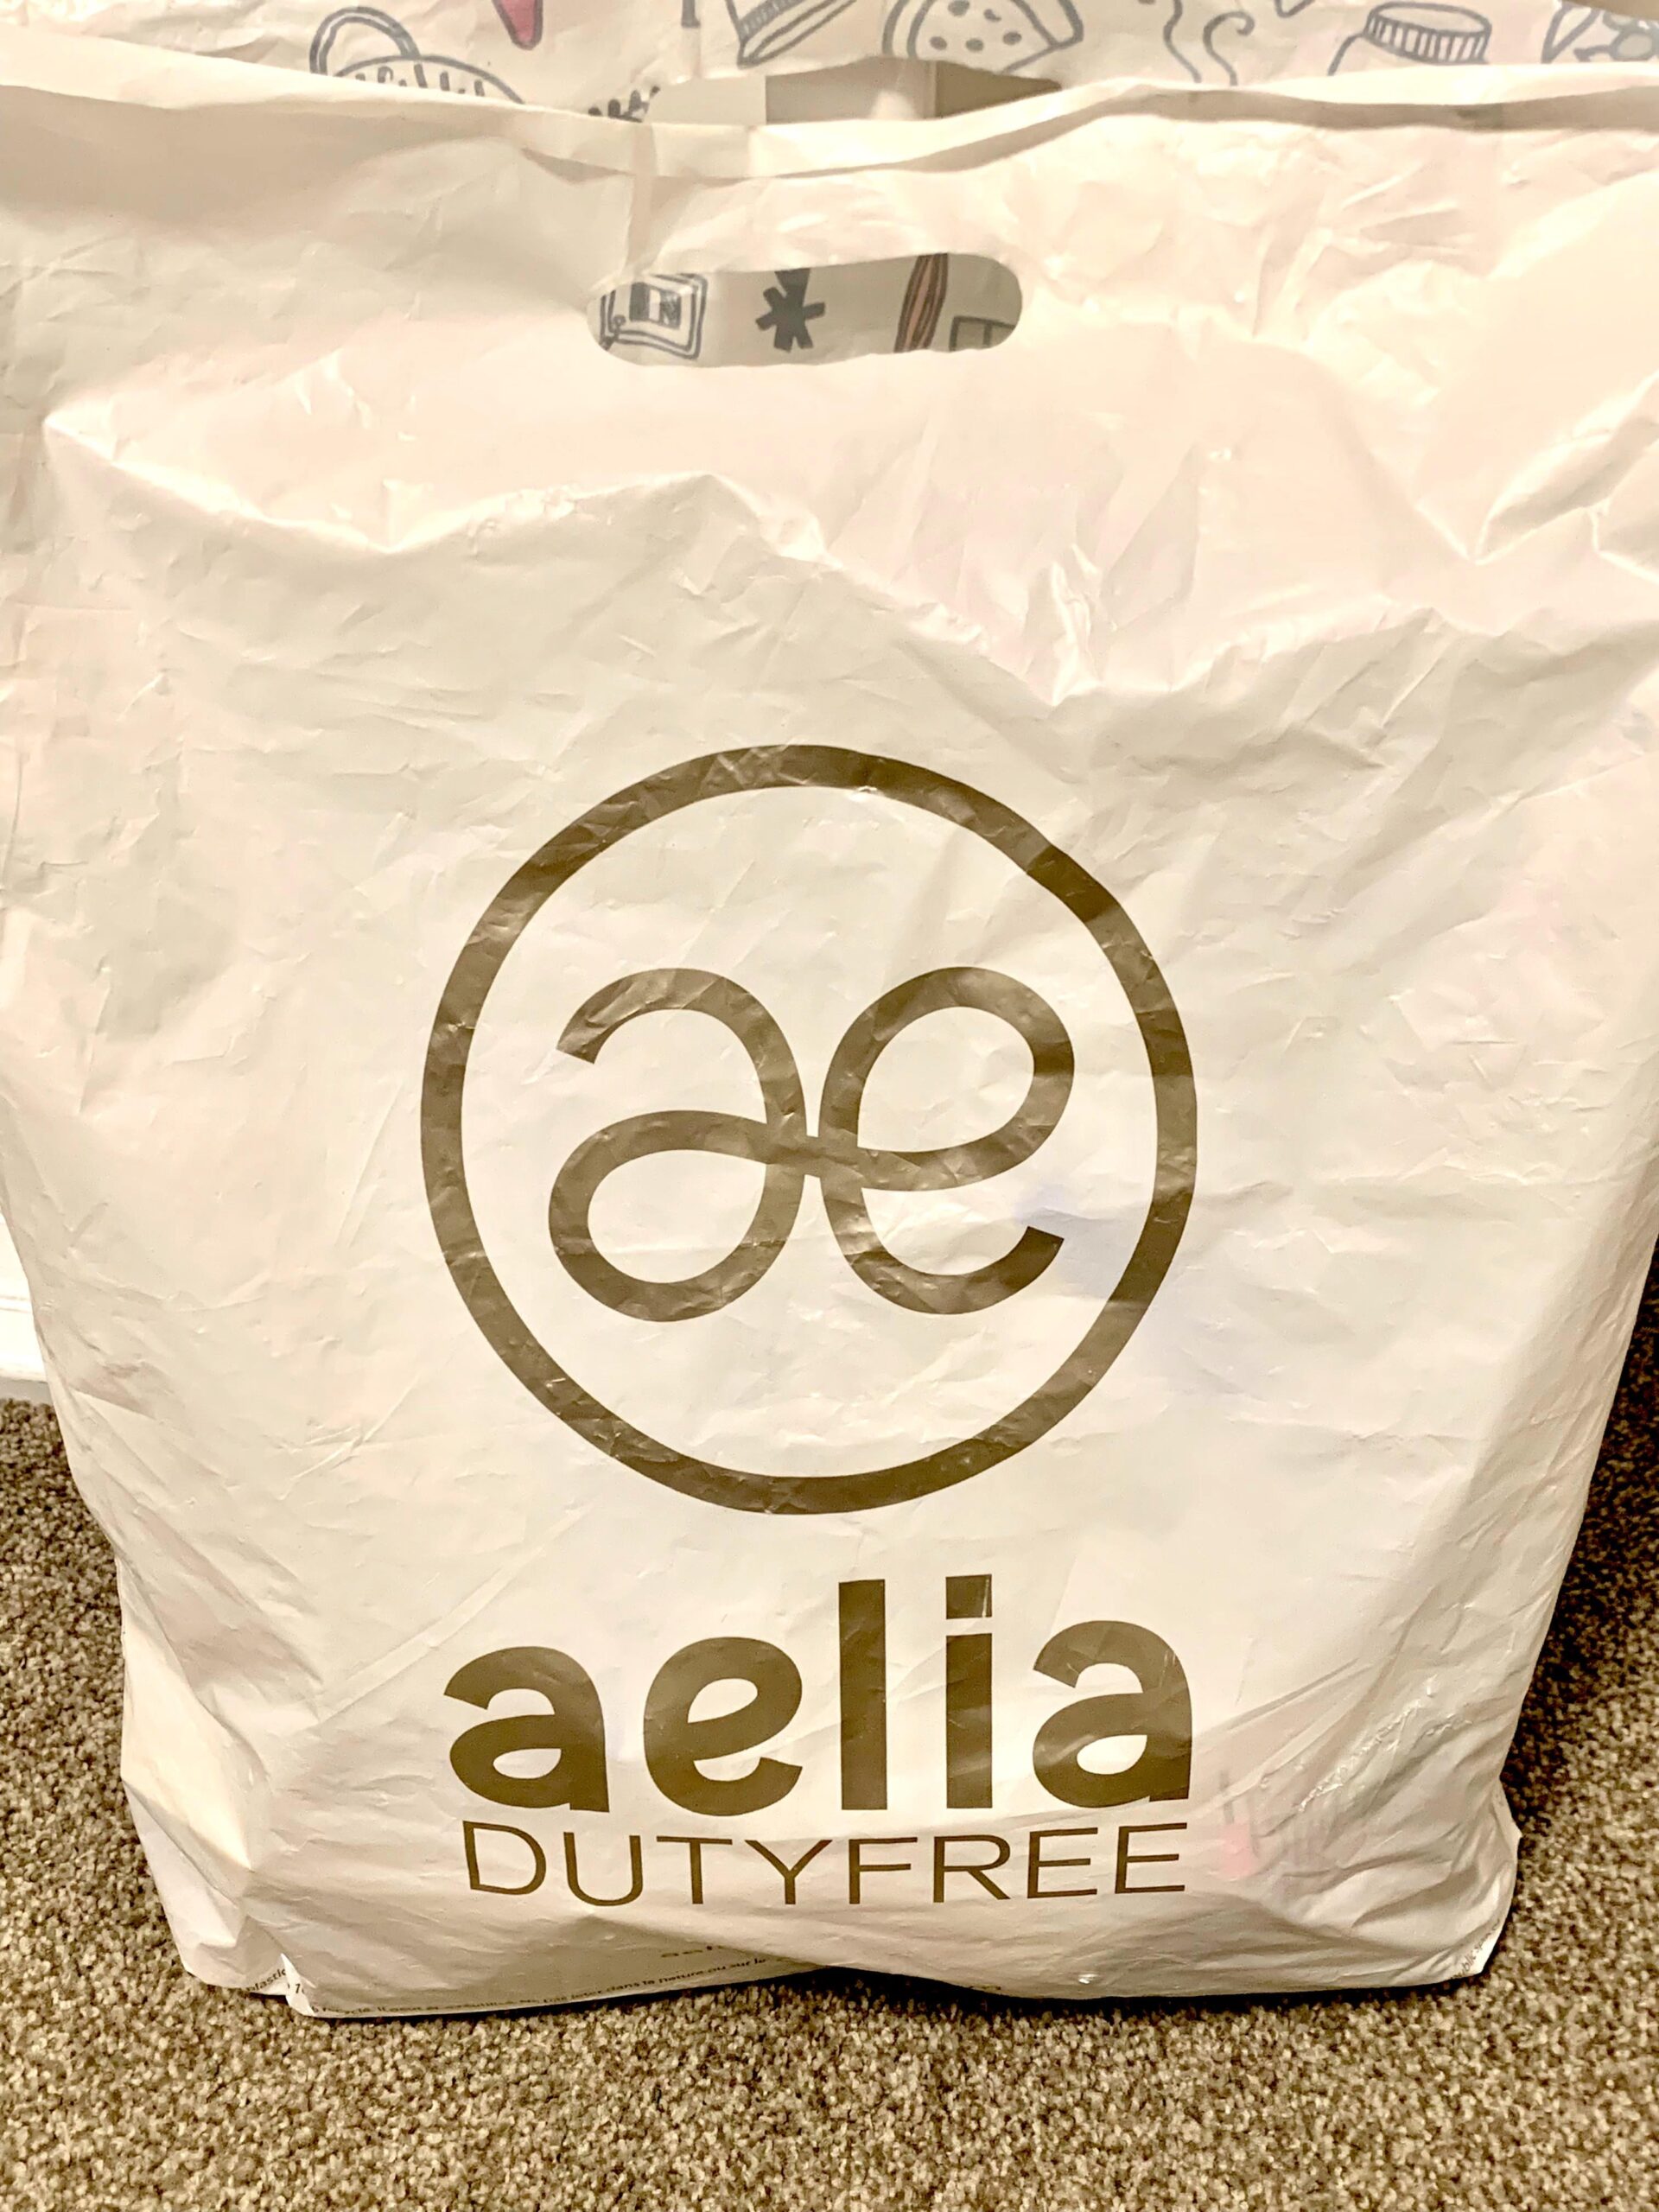 Does this random shopping bag count as aespa merchandise? 😹😹😹